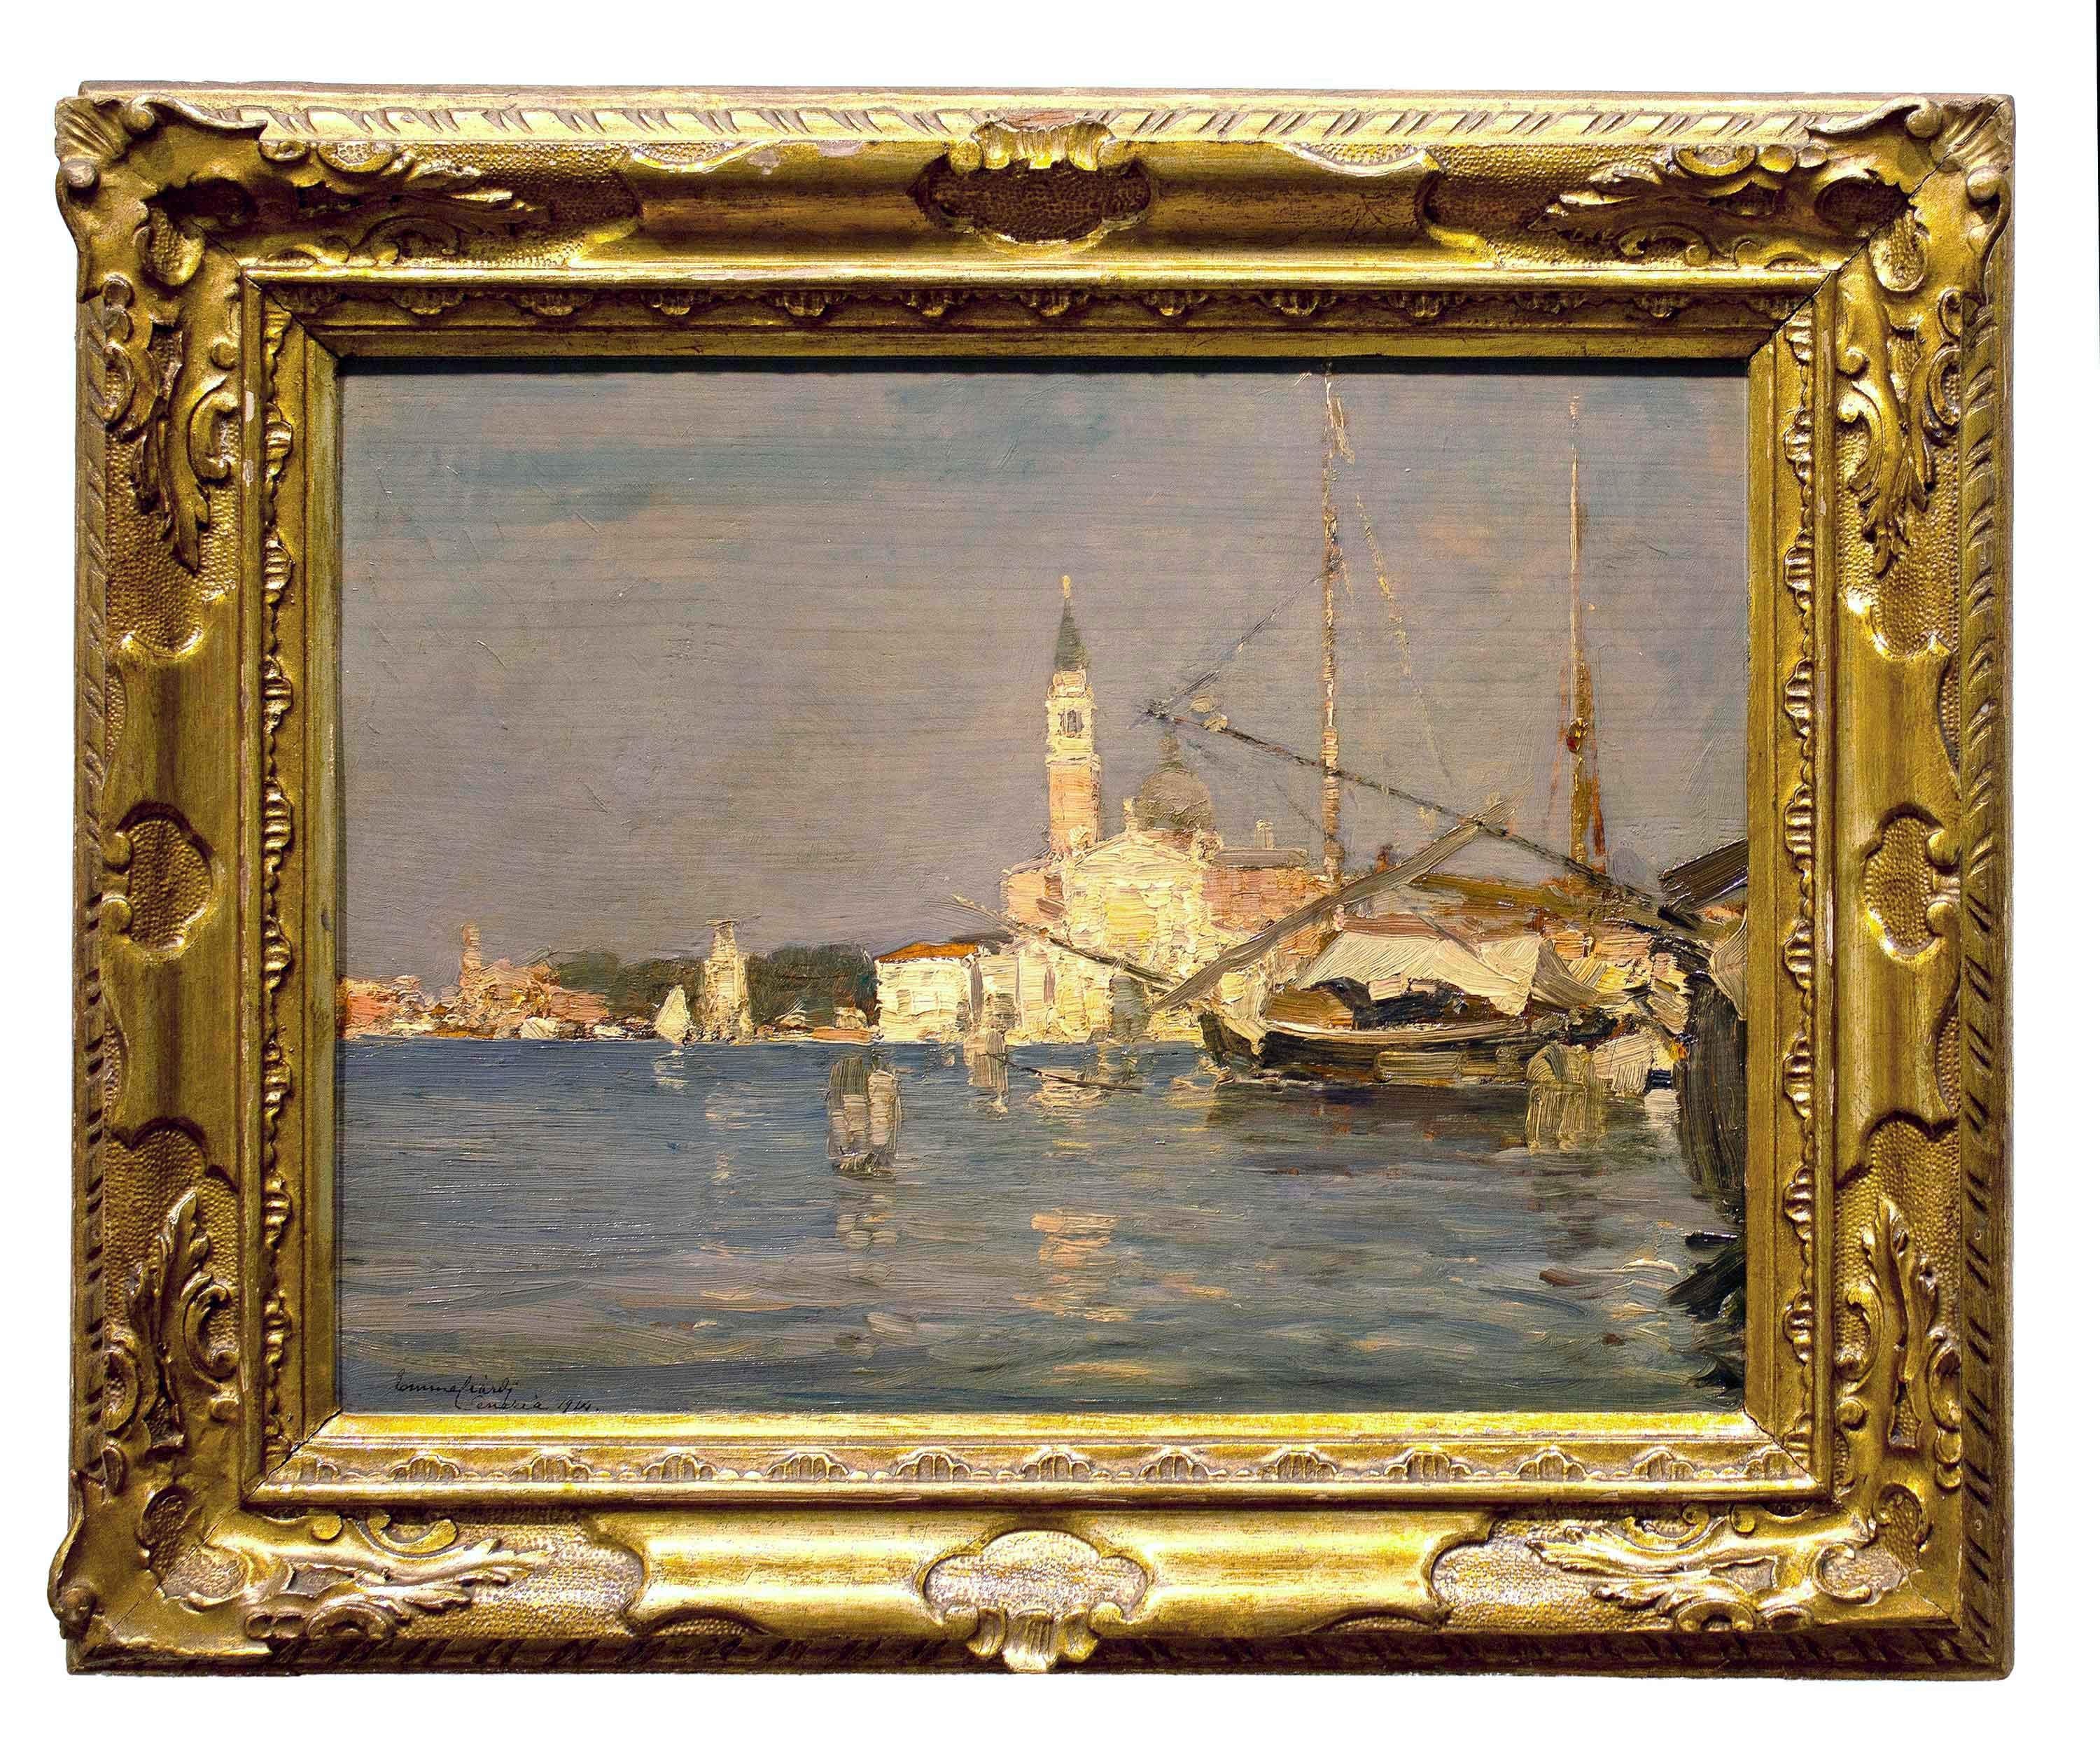 Emma Ciardi Landscape Painting - Impression - Venice (Island of San Giorgio)